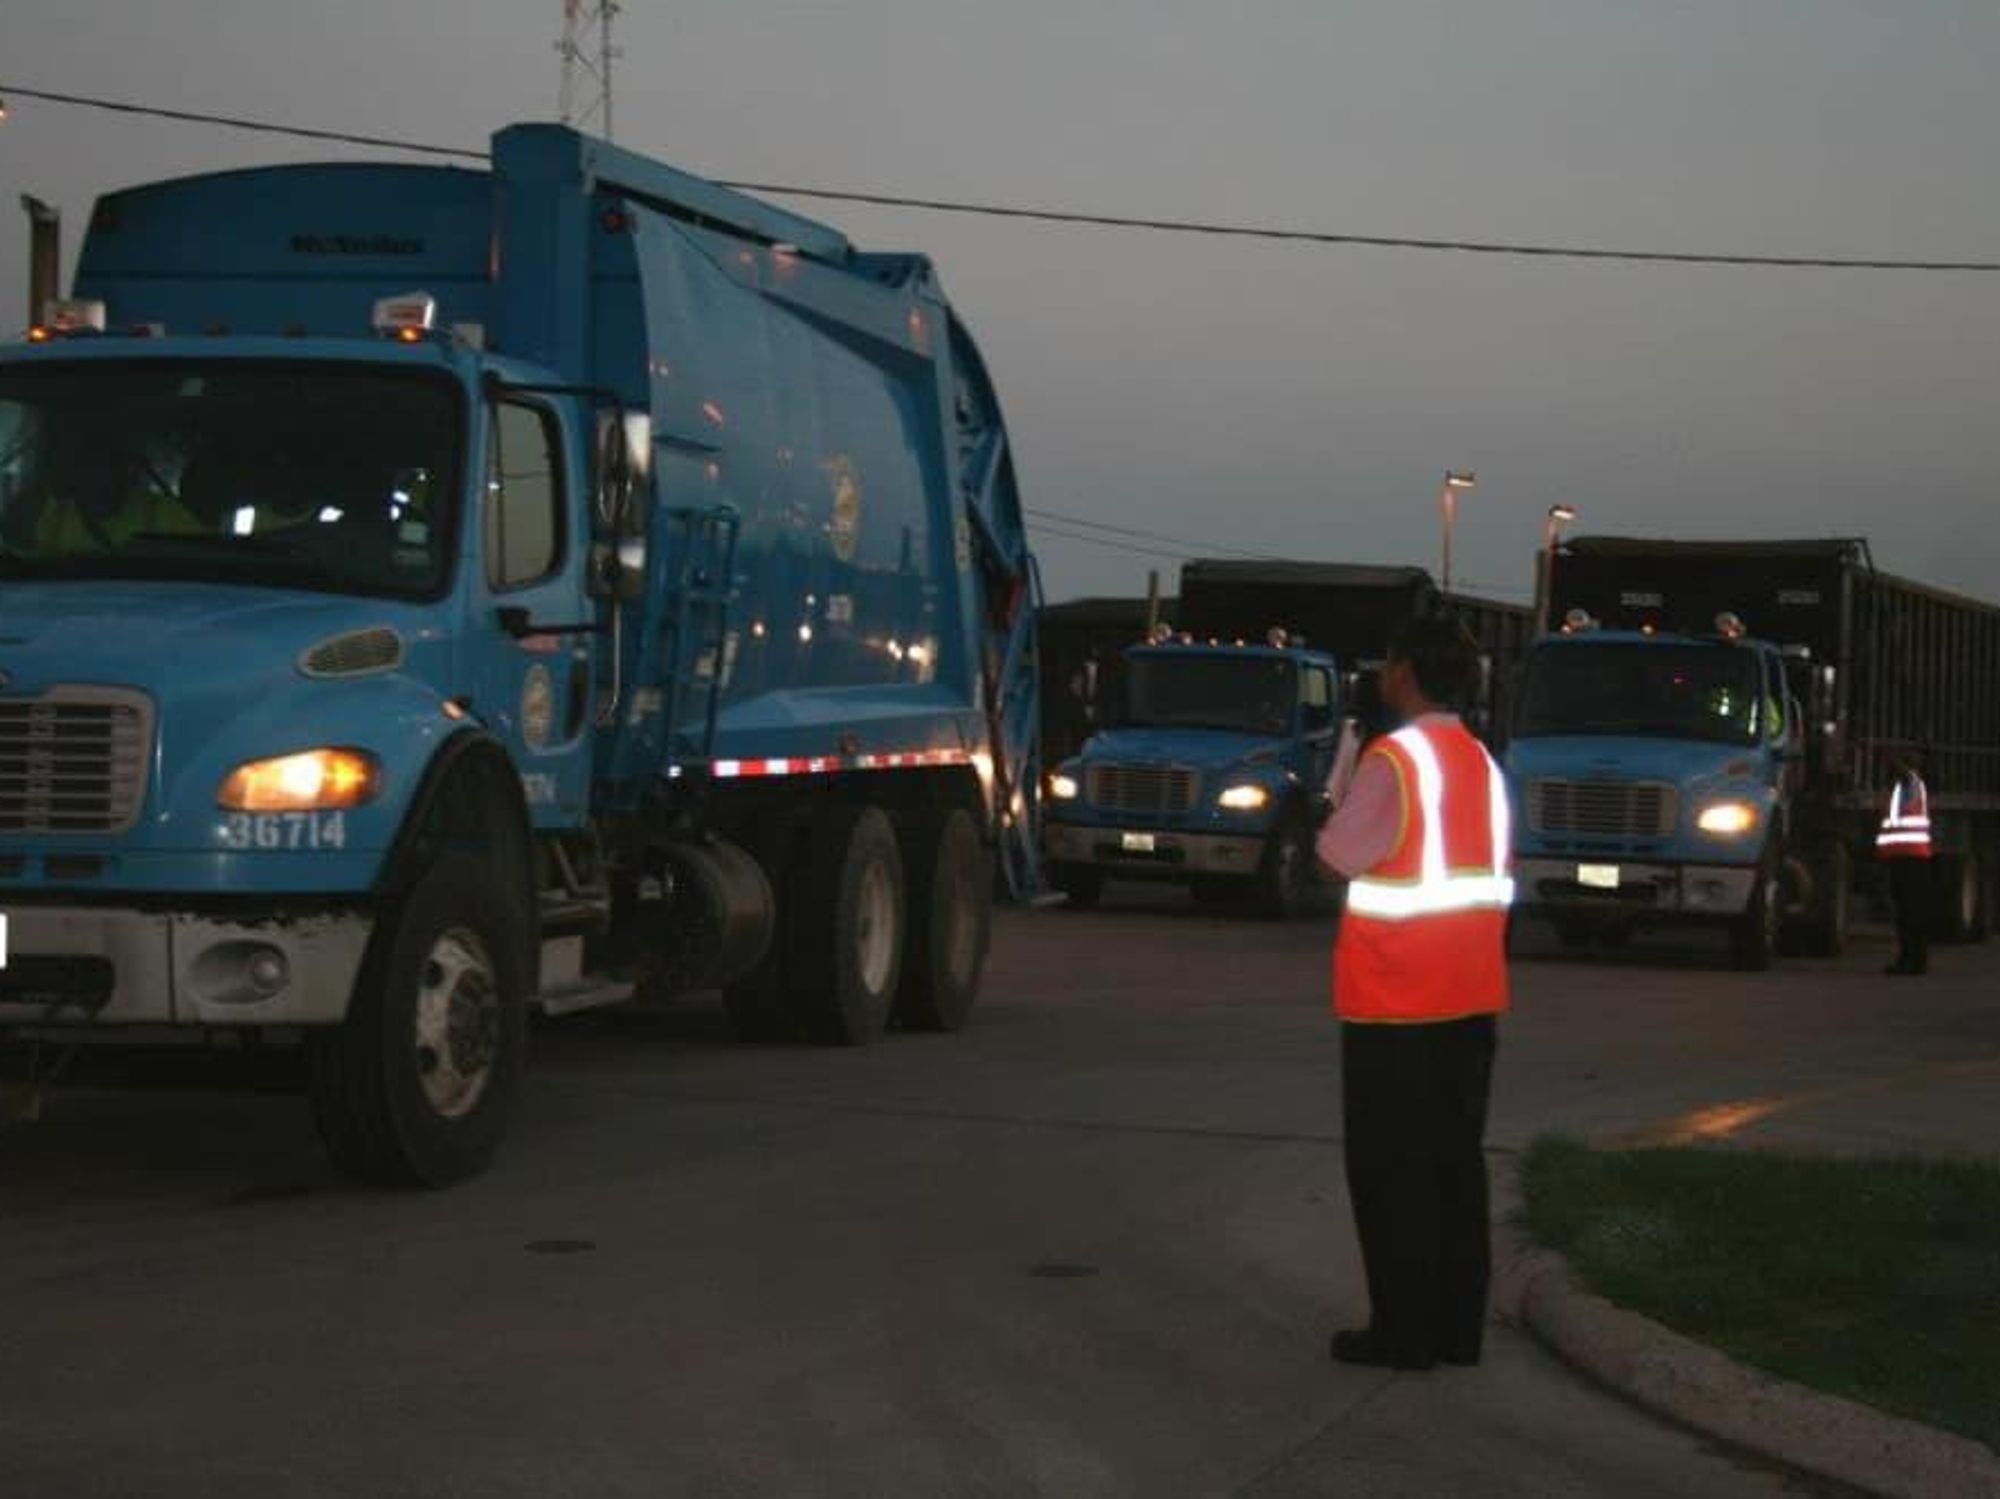 City of Houston garbage trucks